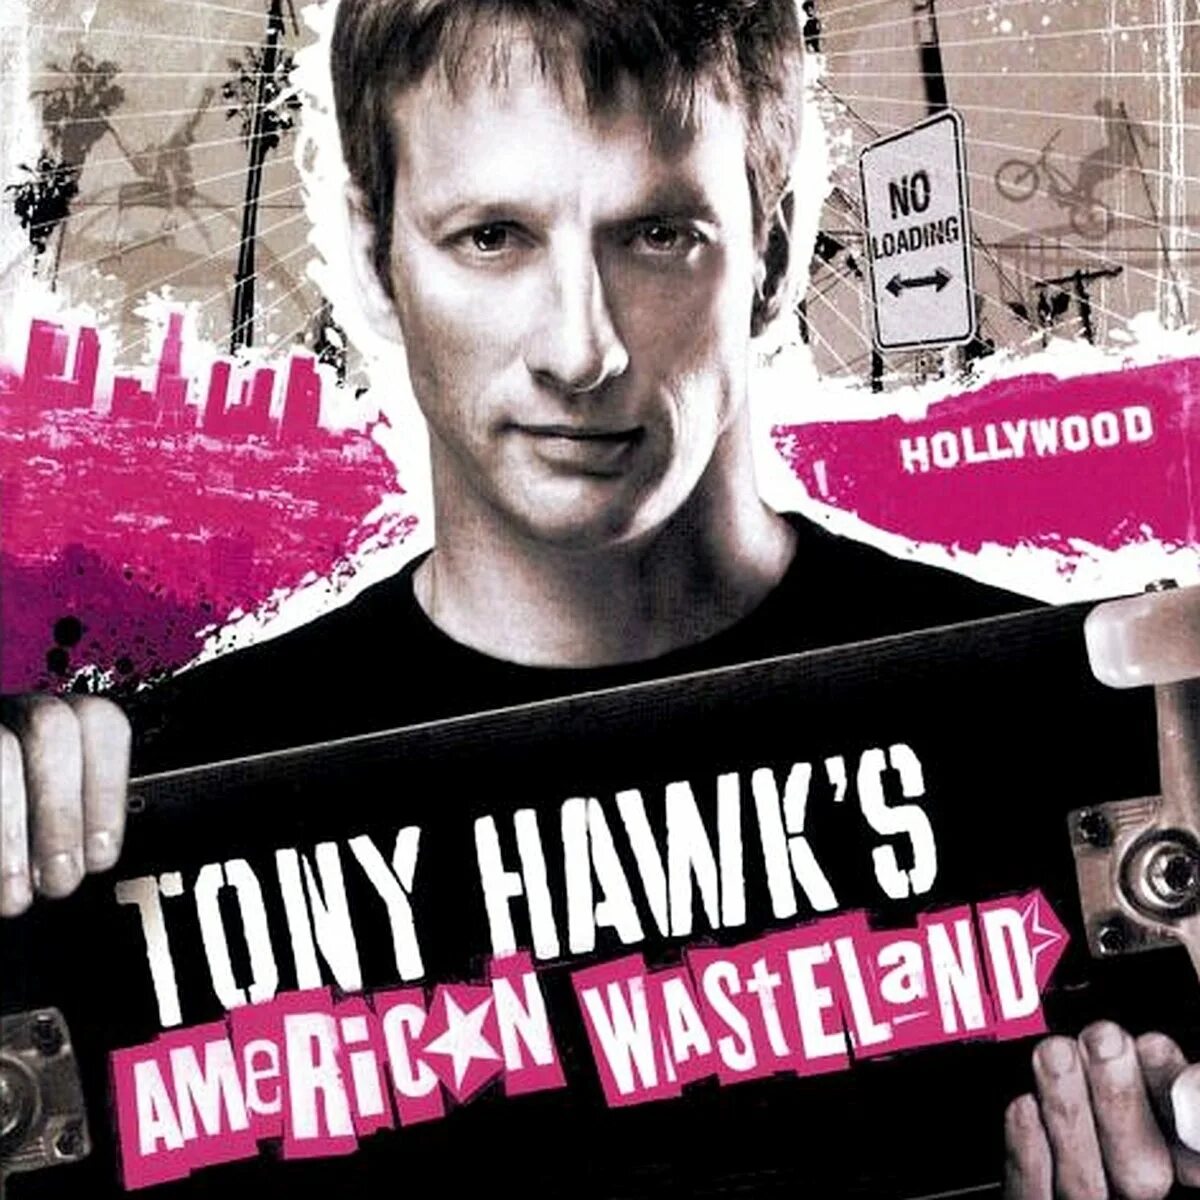 Tony hawk american. Tony Hawk Wasteland. Тони Хоук Американ вестленд. Игра Tony Hawk American Wasteland. Tony Hawk American Wasteland обои.